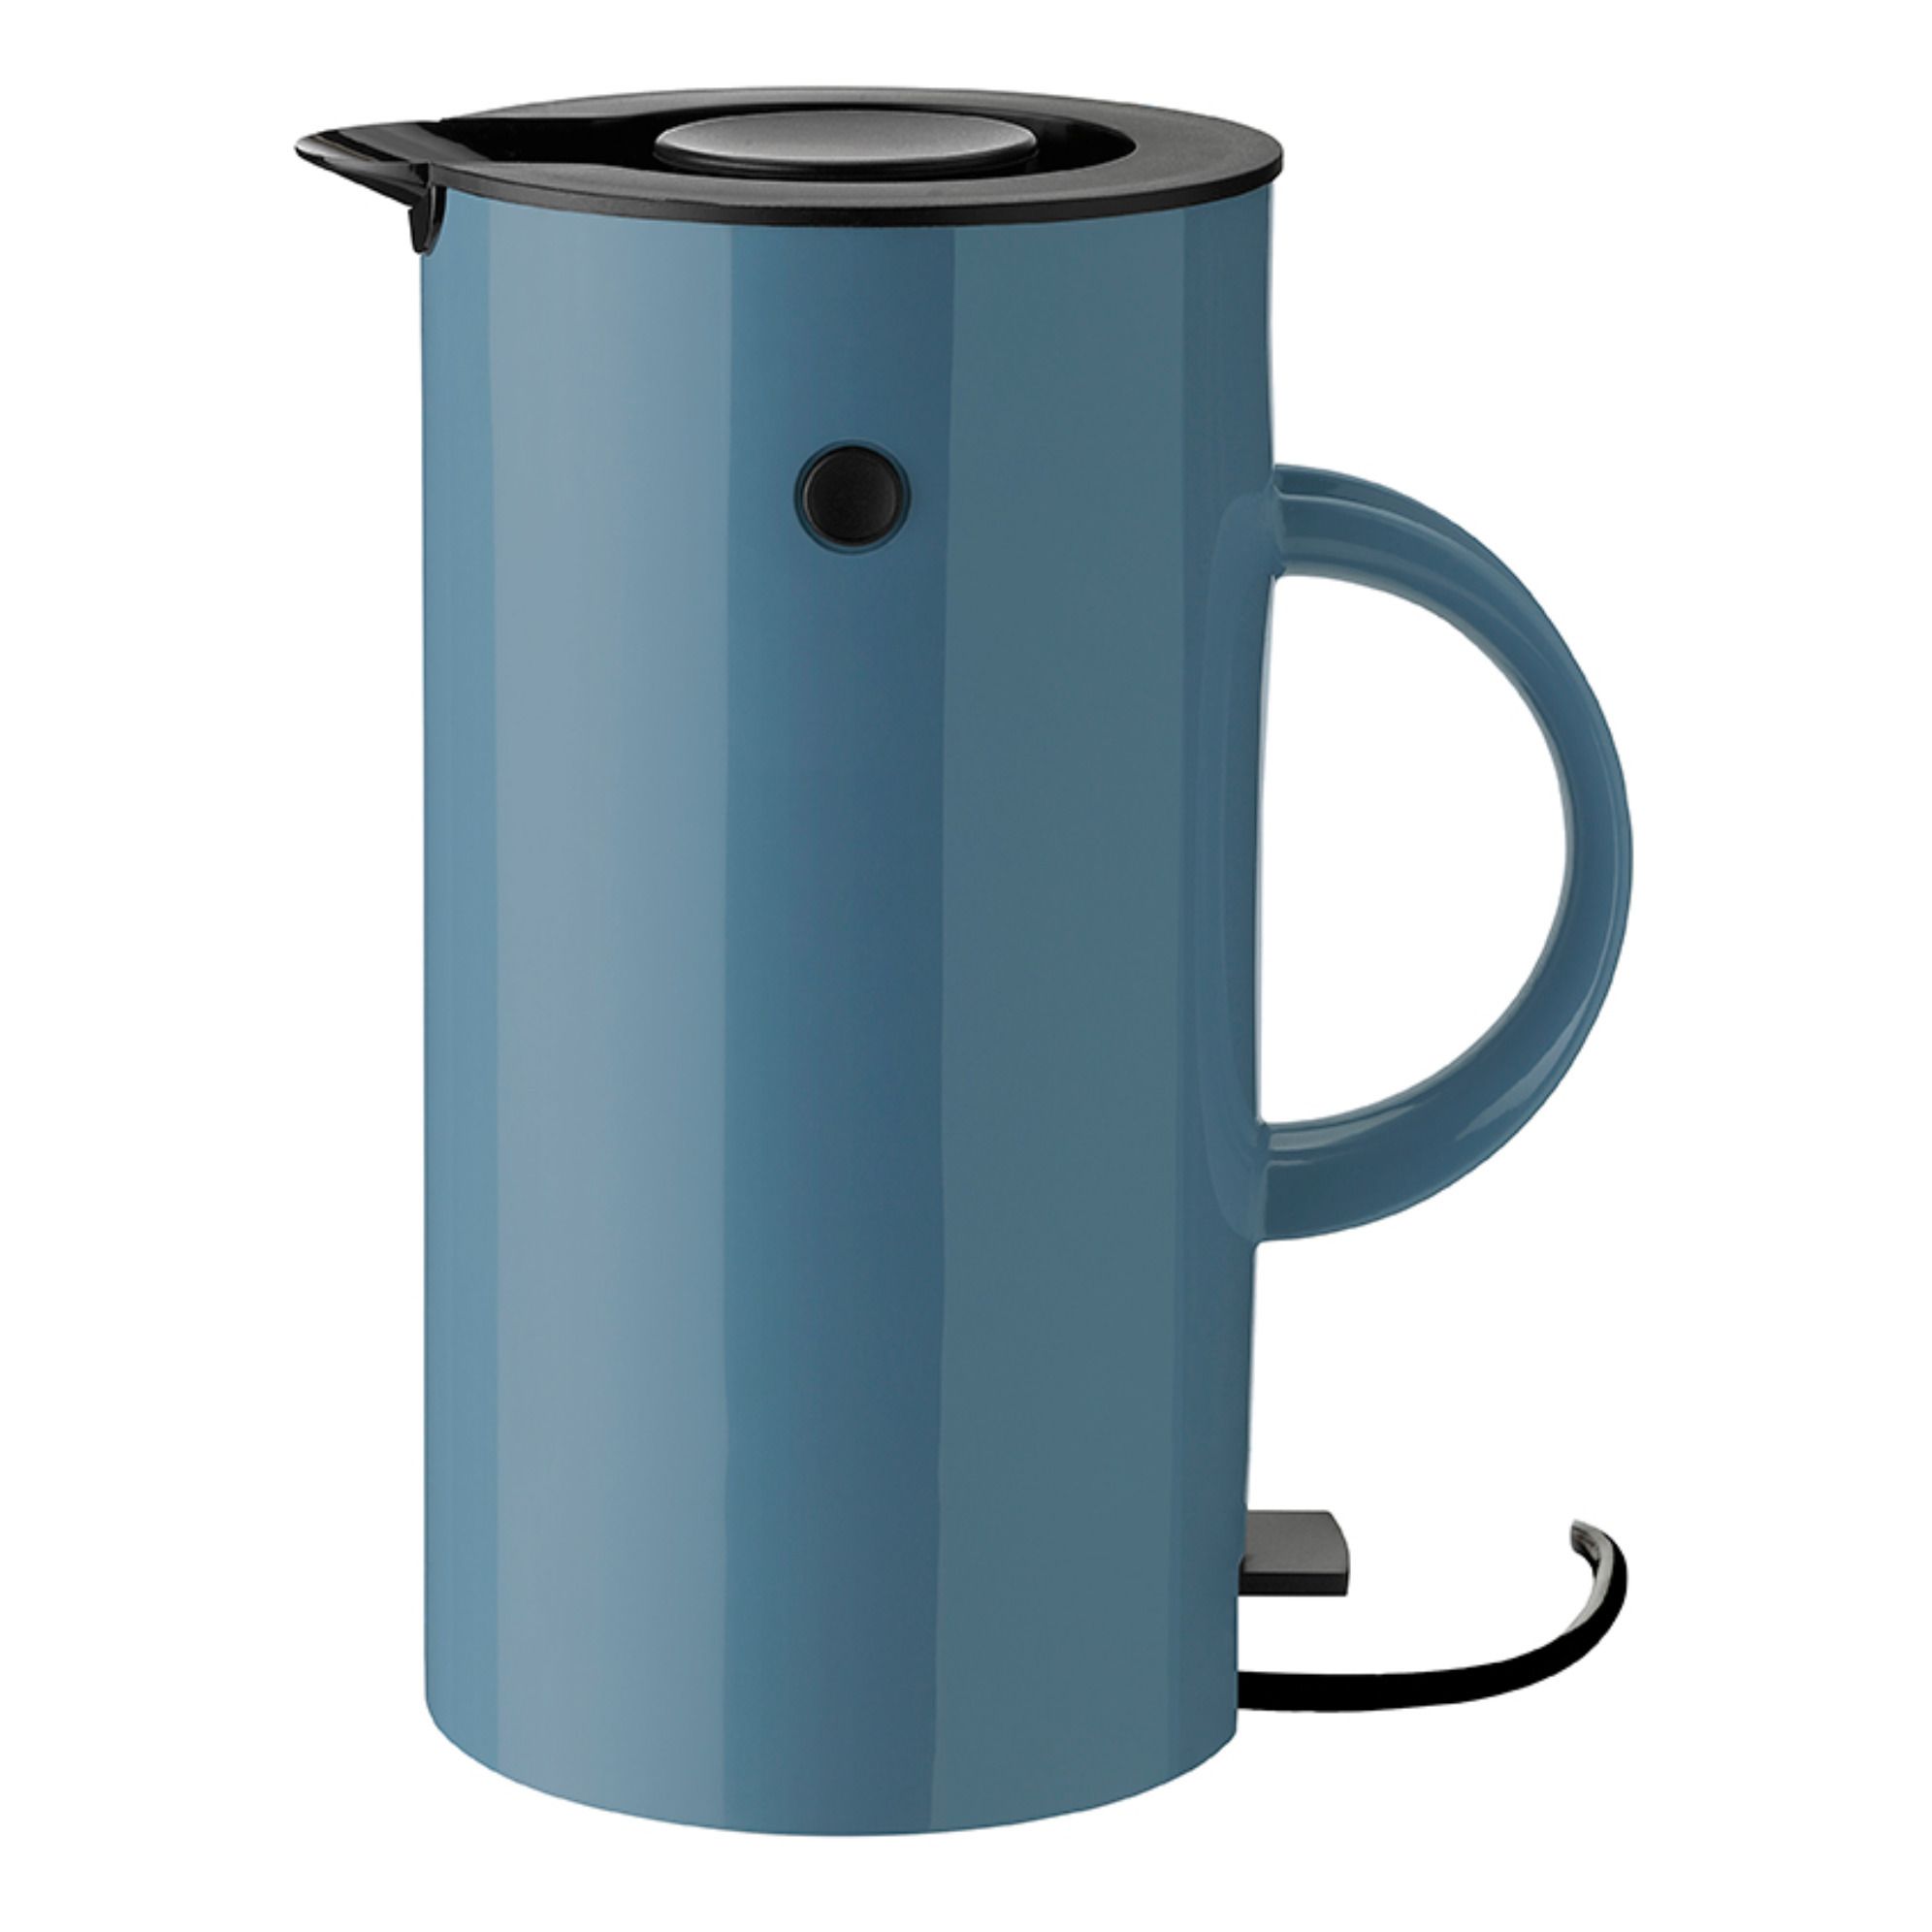 Stelton - Emma electric kettle (EU) 1.2 l.